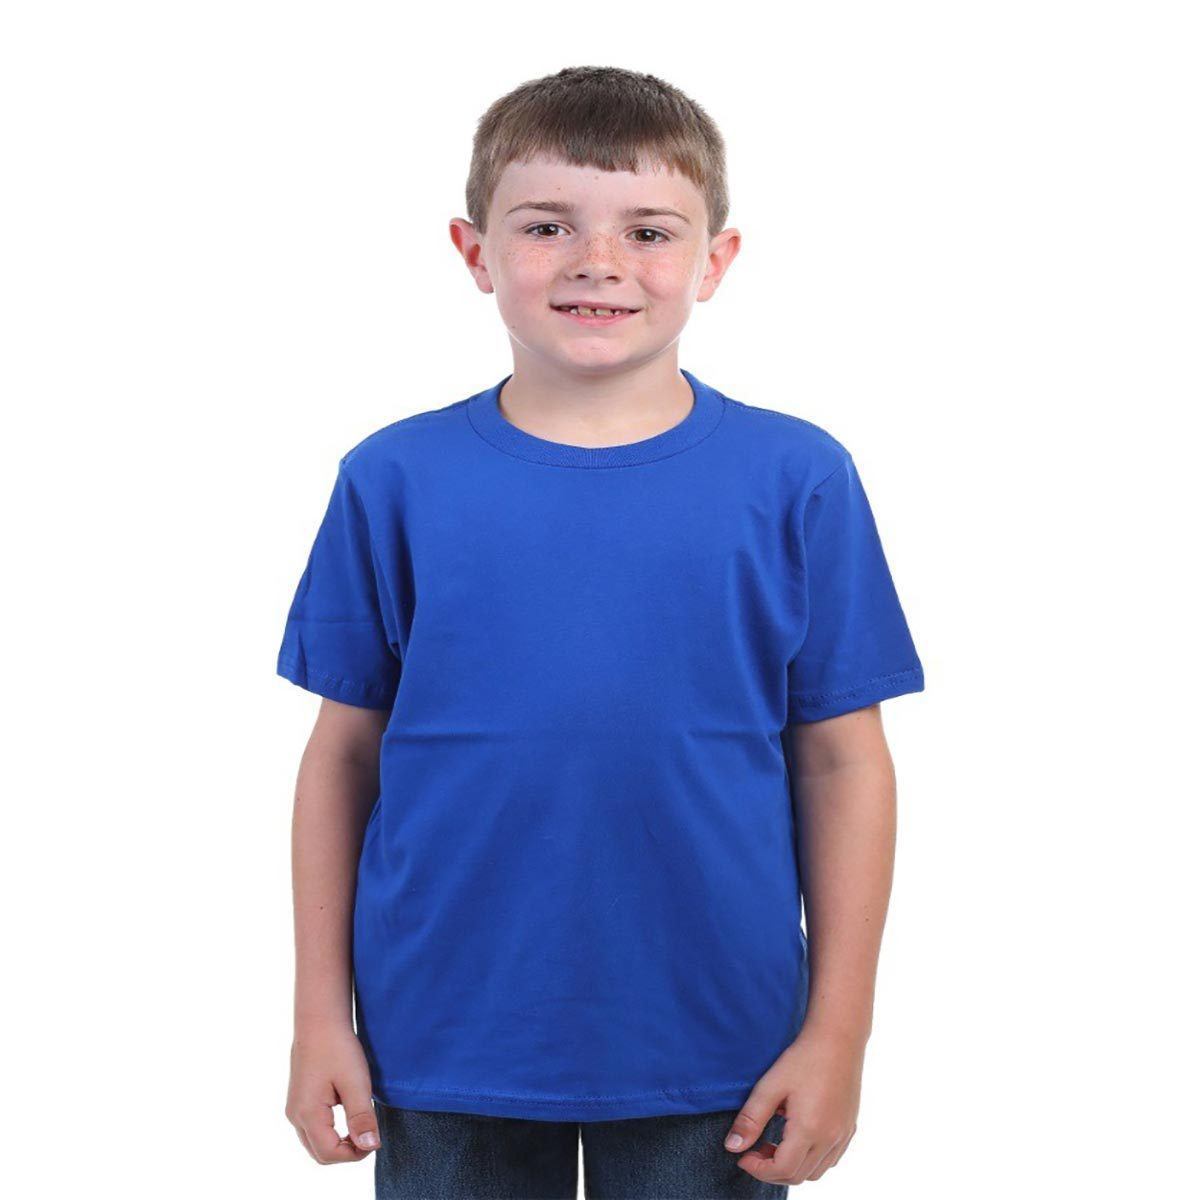 boys-next-level-royal-blue-t-shirt_262a4451-1399-47e1-878d-2e2cbb421cb5 ...